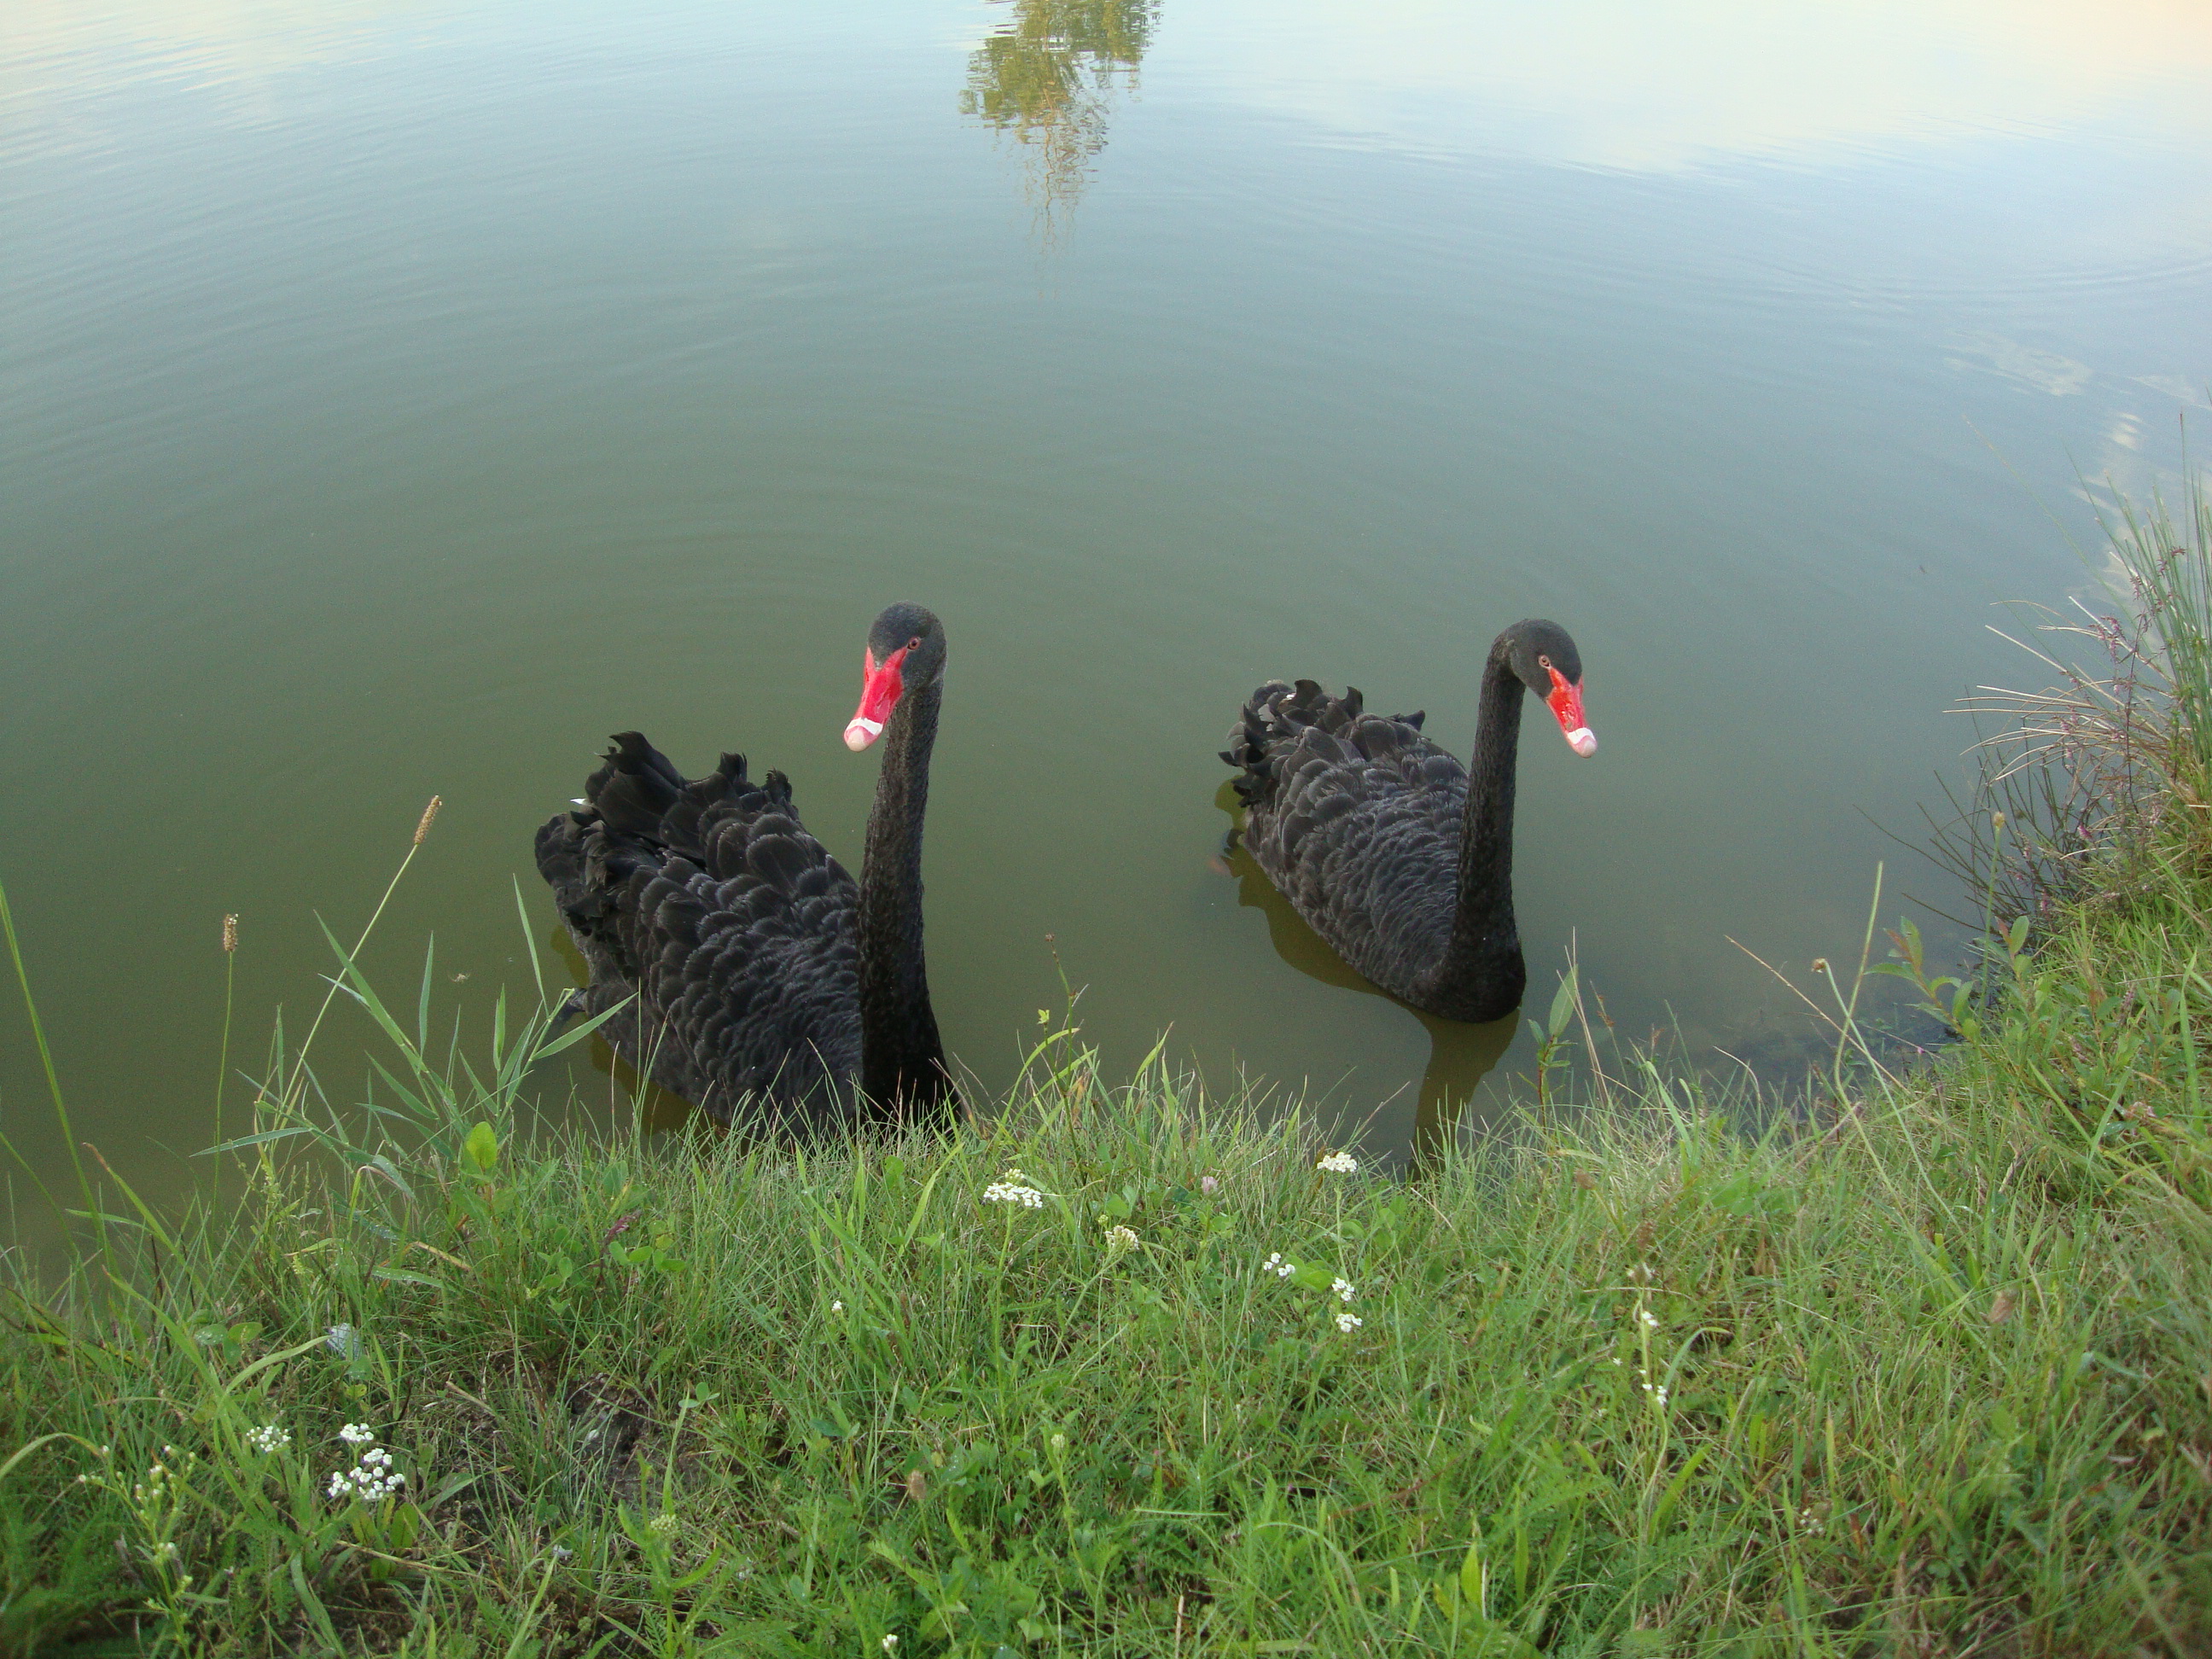 A beautiful pair of black swans